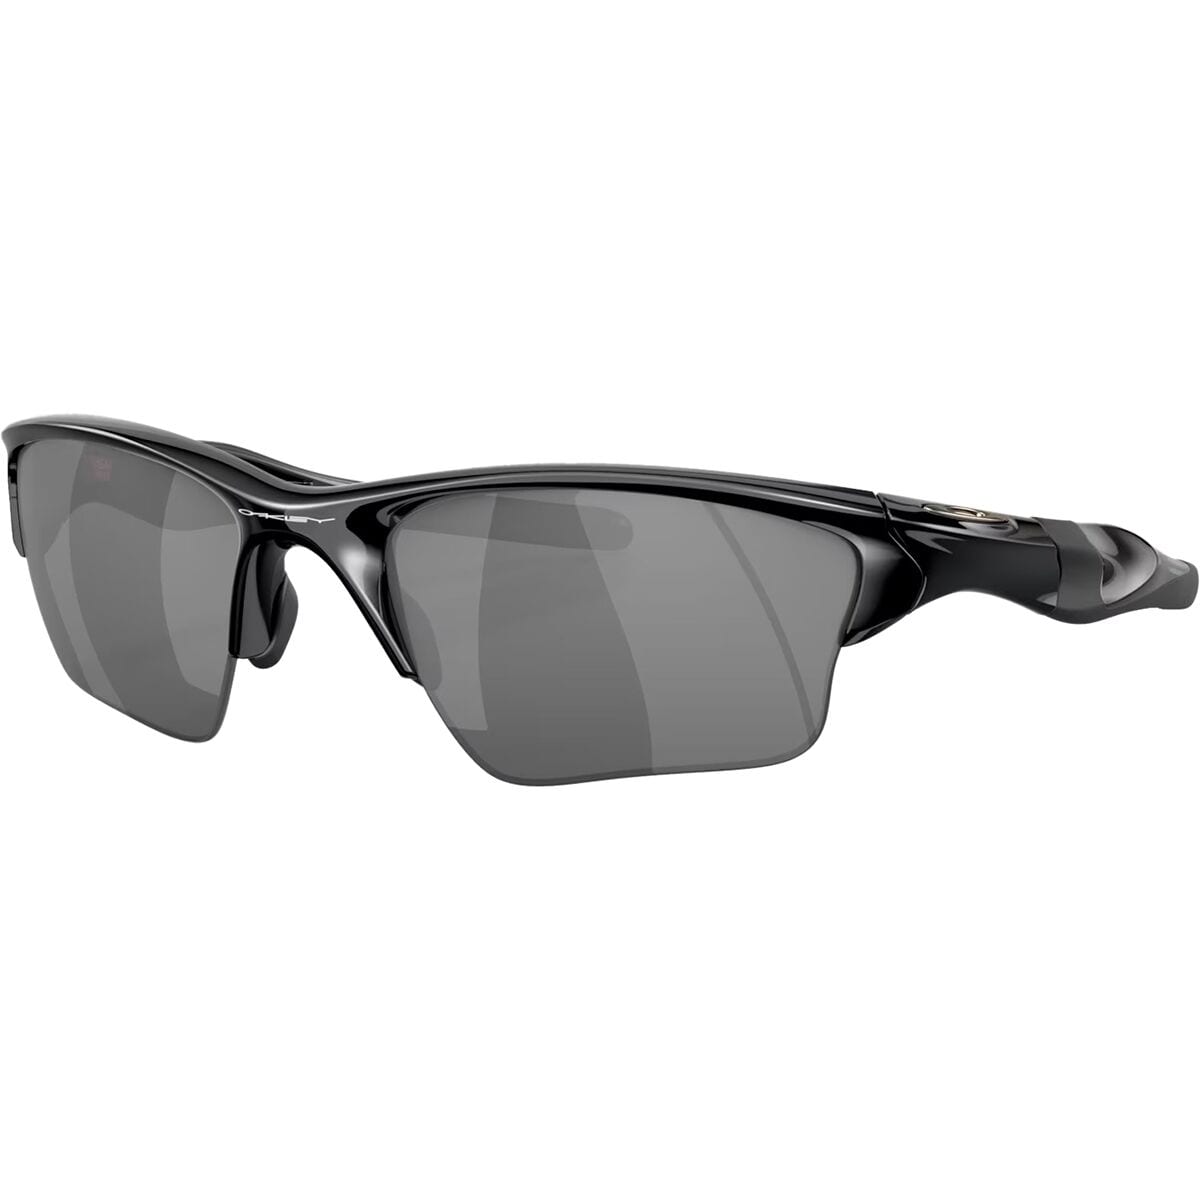 Oakley Half Jacket 2.0 Sunglasses - Men